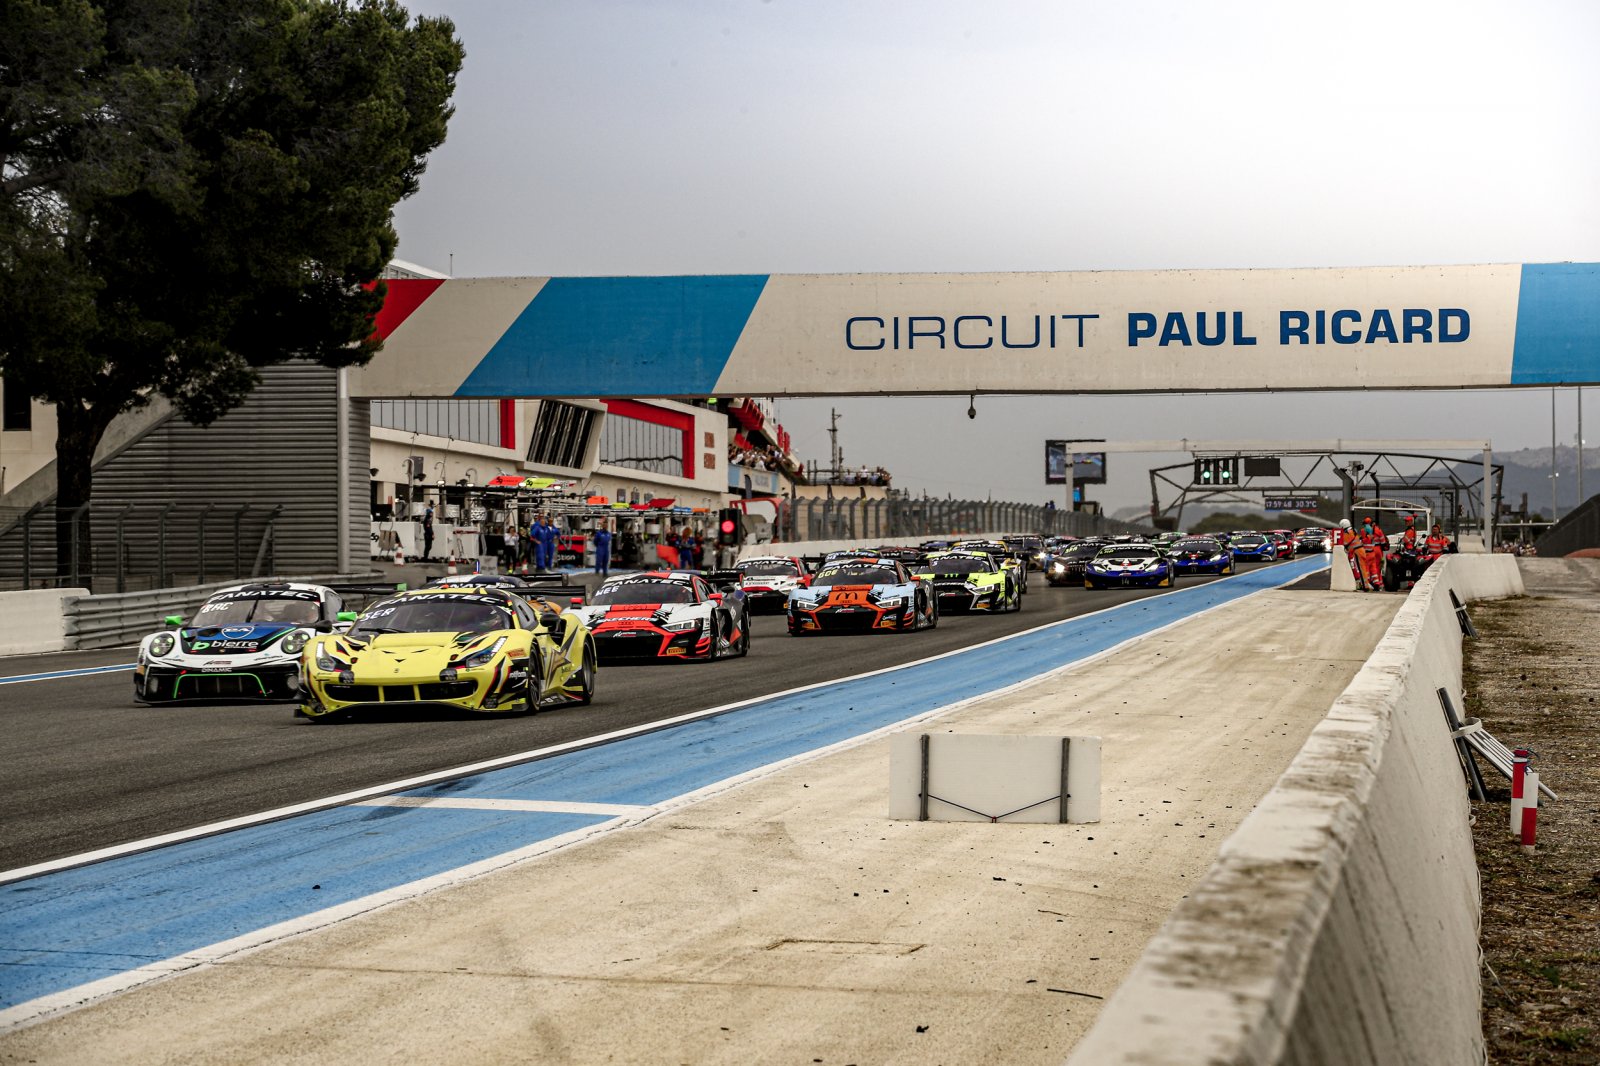 FIA Motorsport Games ready for 2022 return